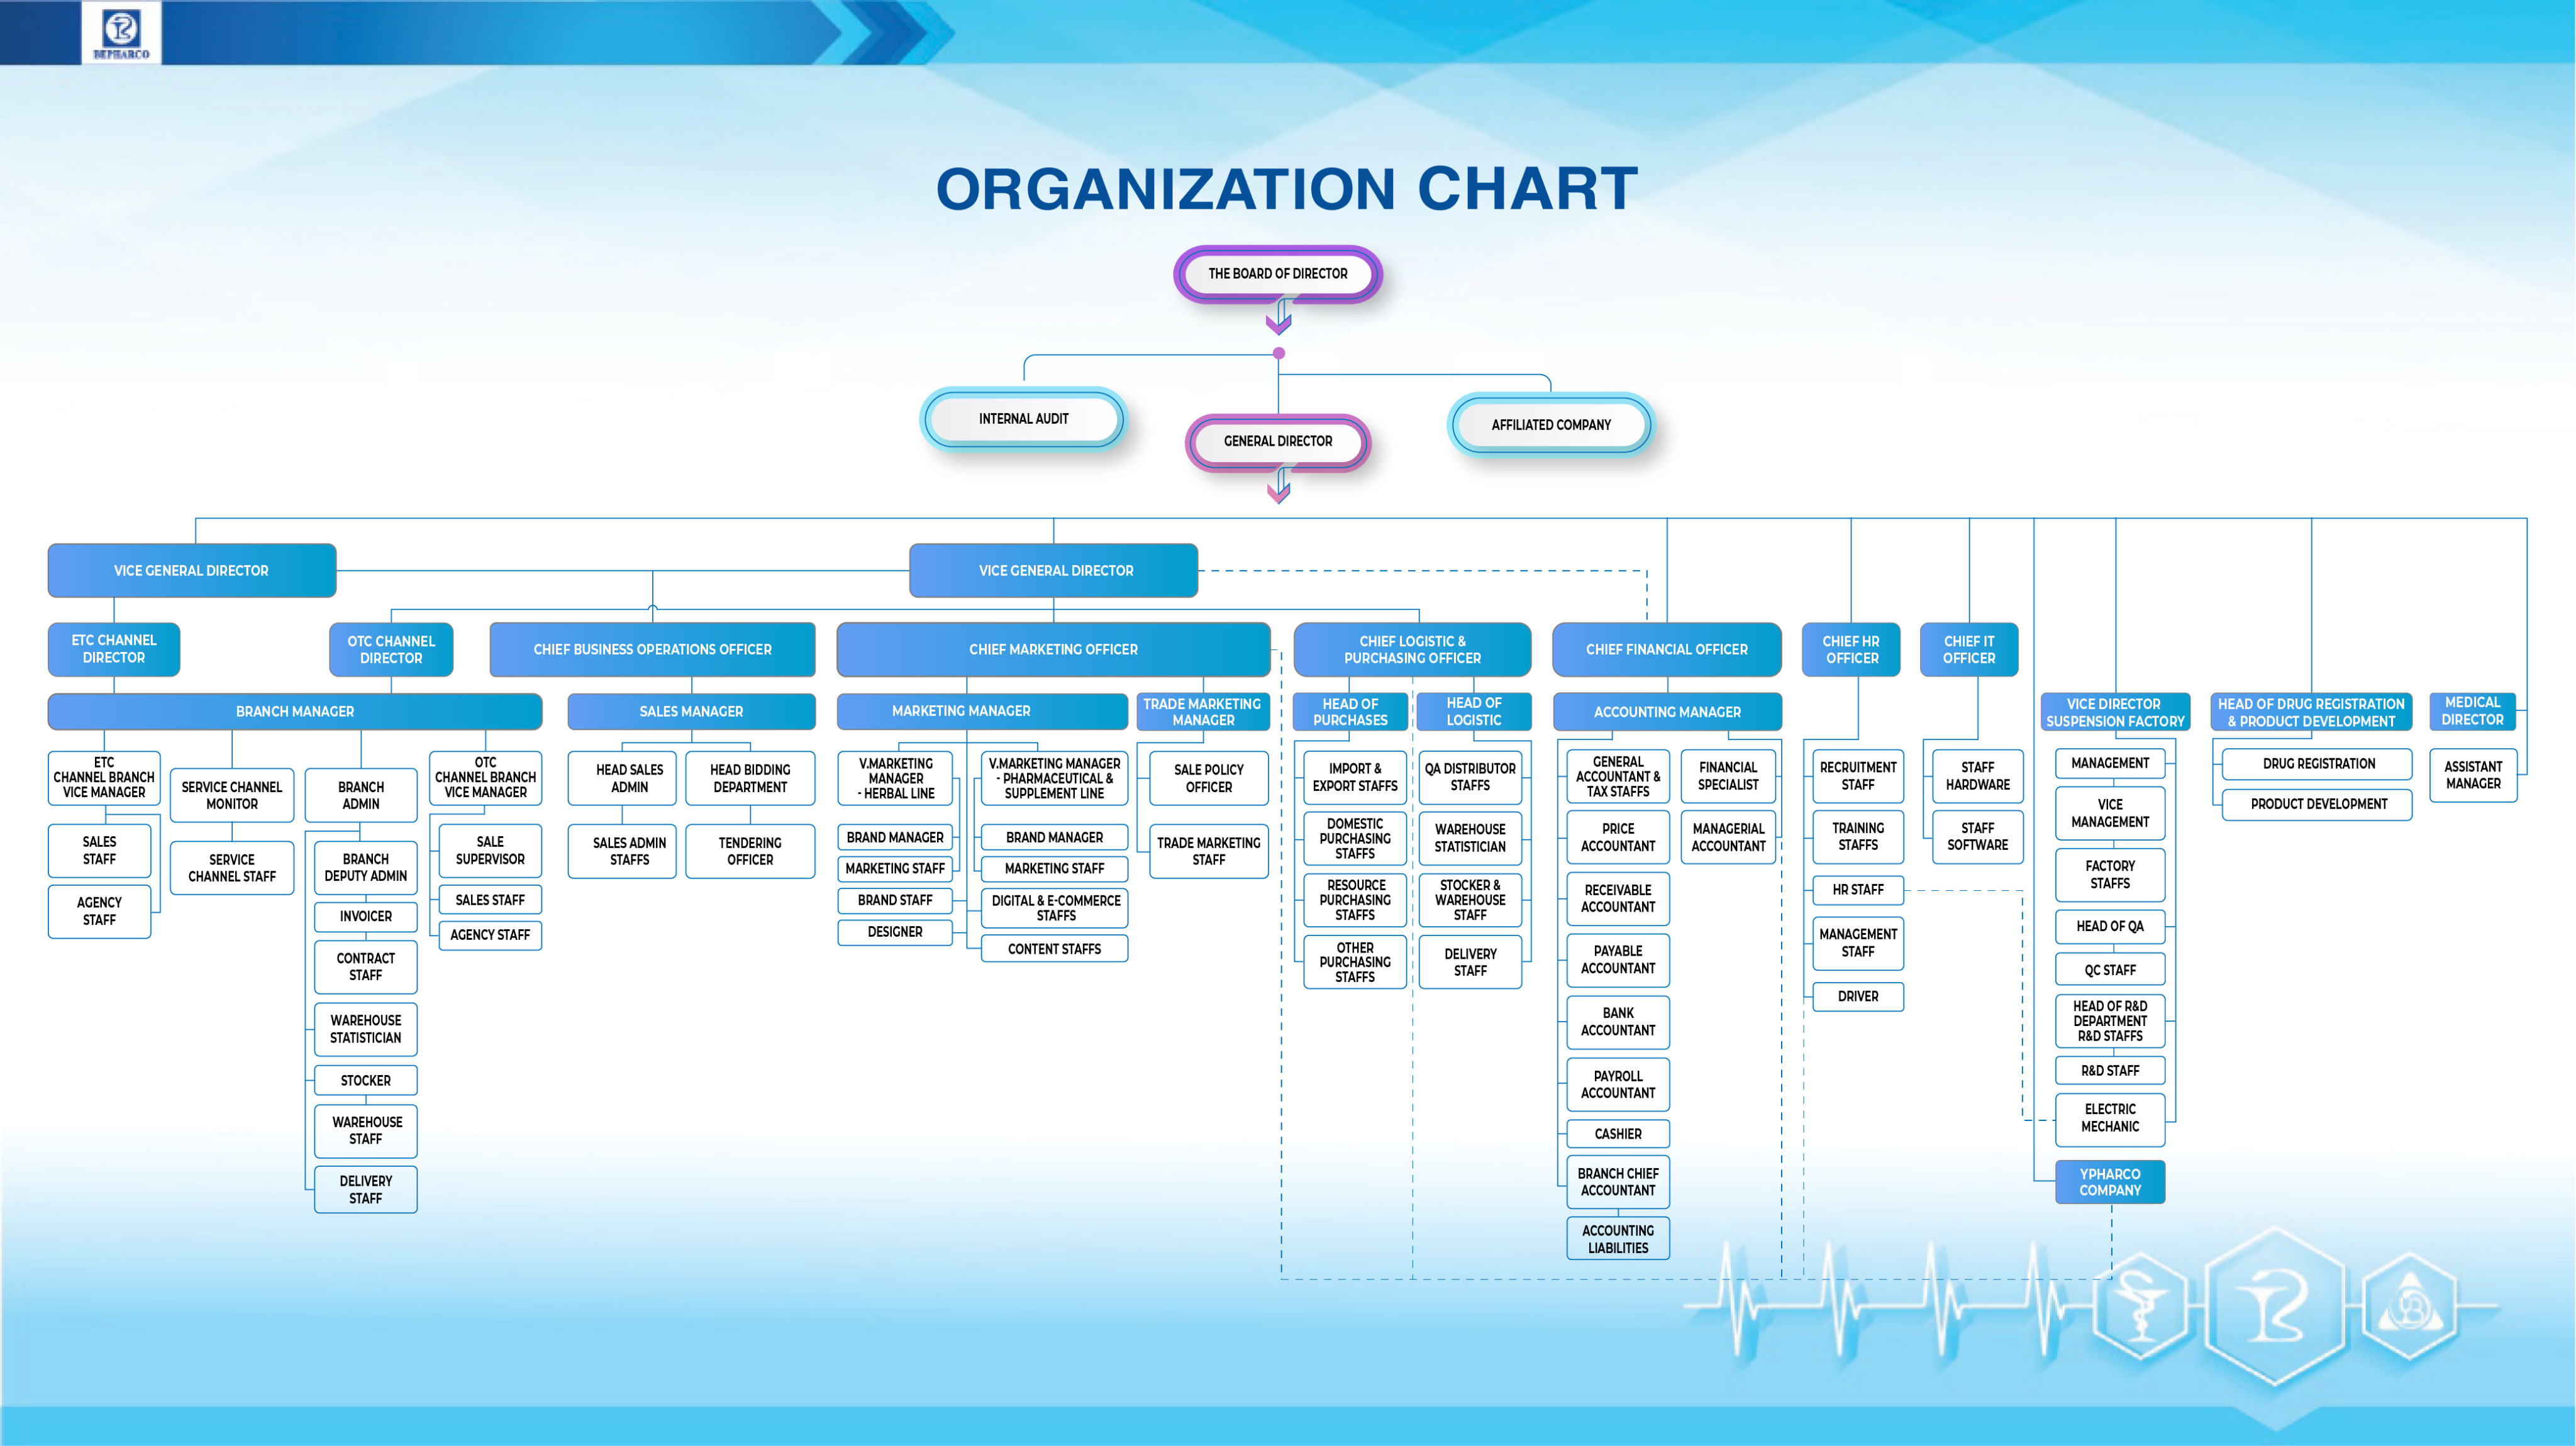 ORGANIZATION CHART - Bepharco